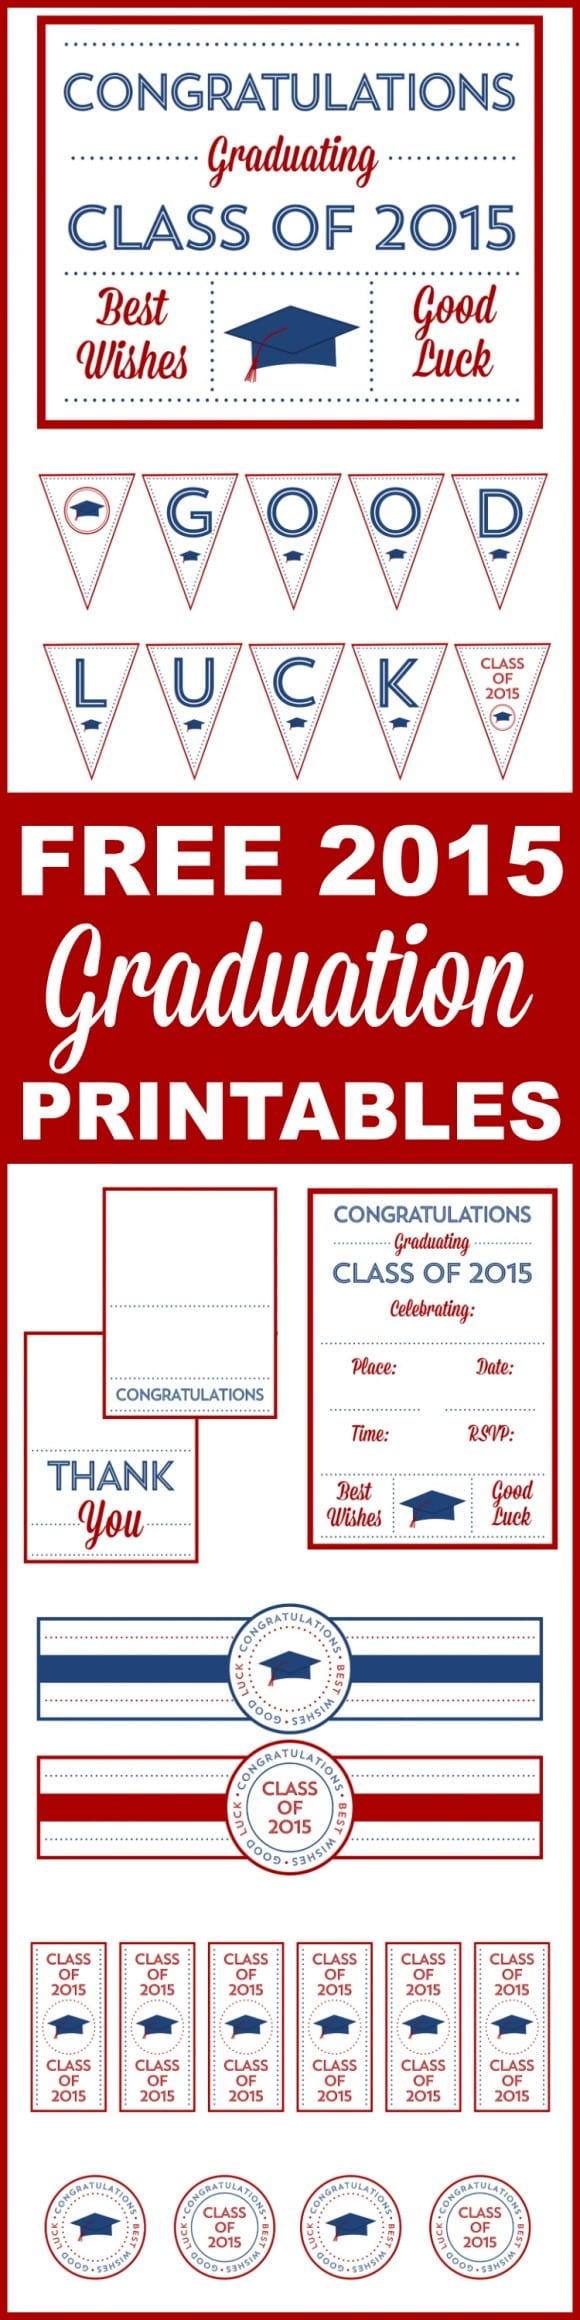 Free 2015 Graduation Printables | CatchMyParty.com